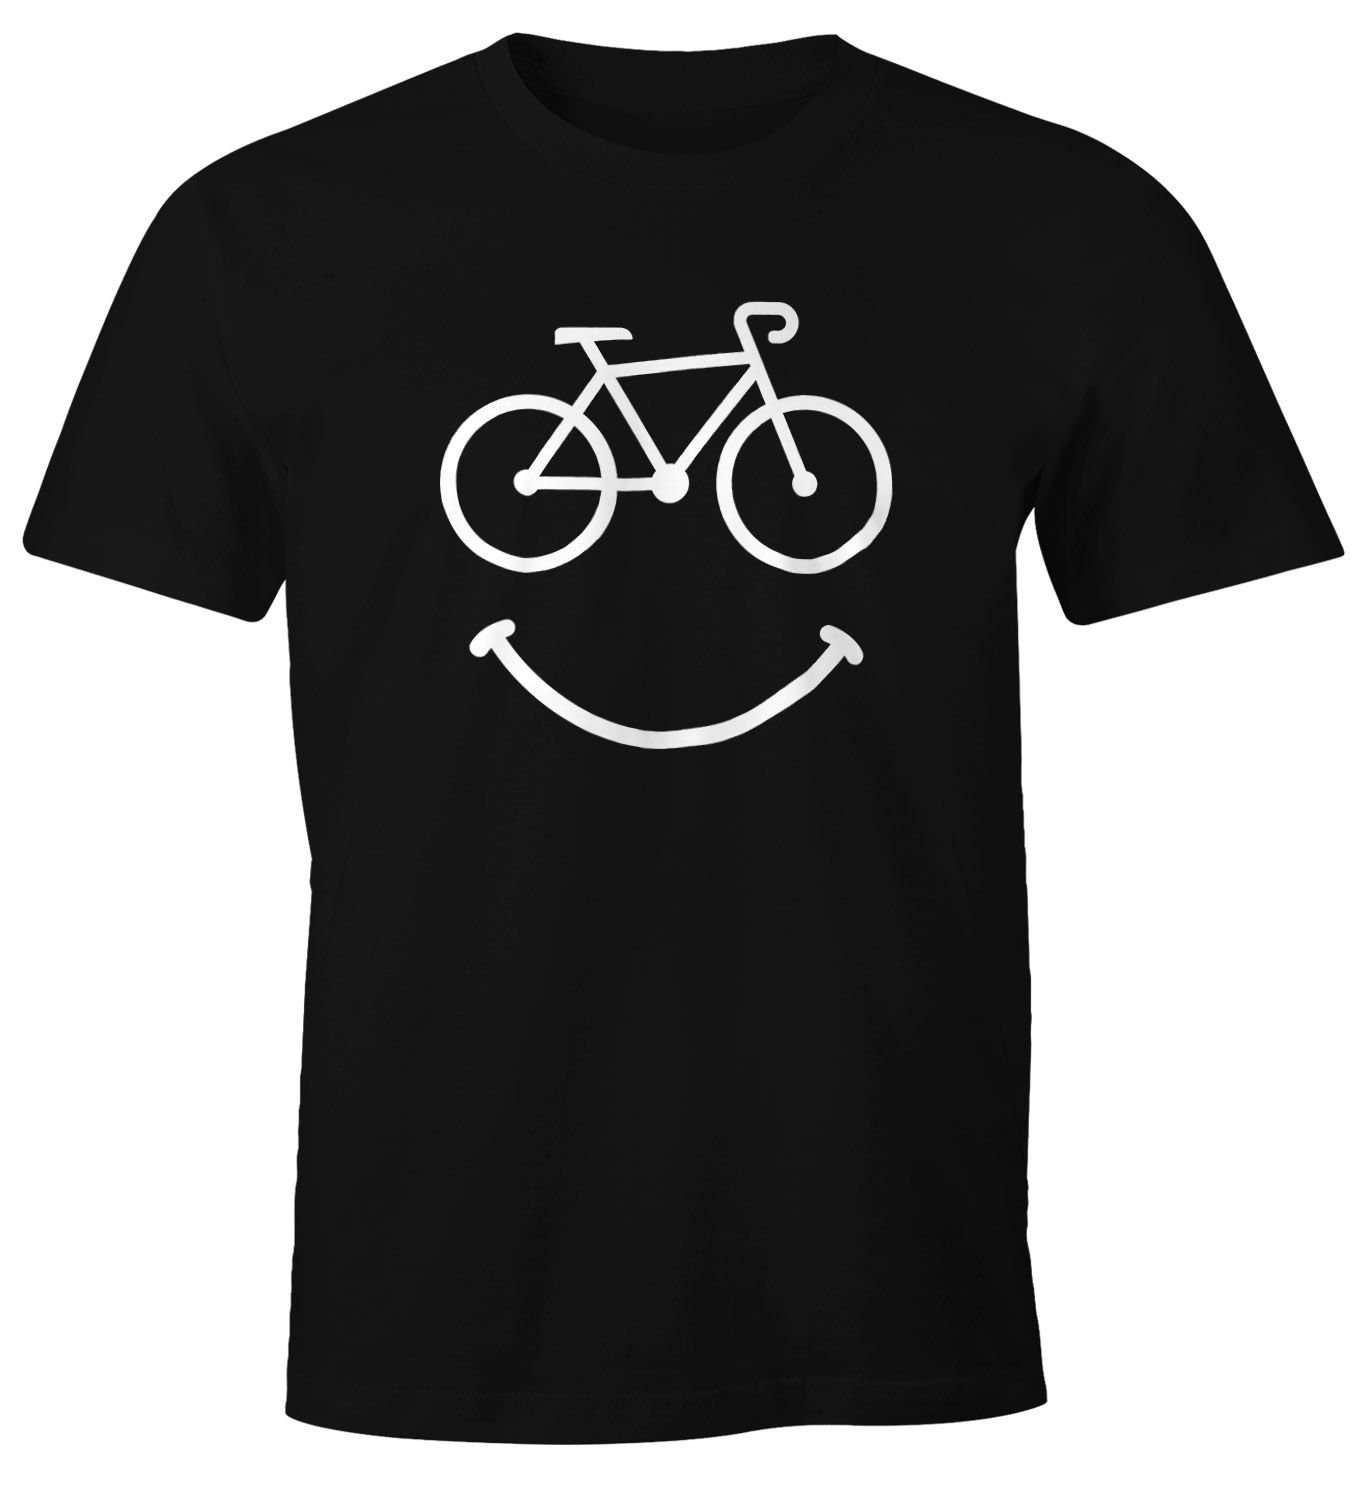 MoonWorks Print-Shirt Fahrrad Herren schwarz Fun-Shirt mit Bike Print T-Shirt Happy Smile Moonworks® Radfahren